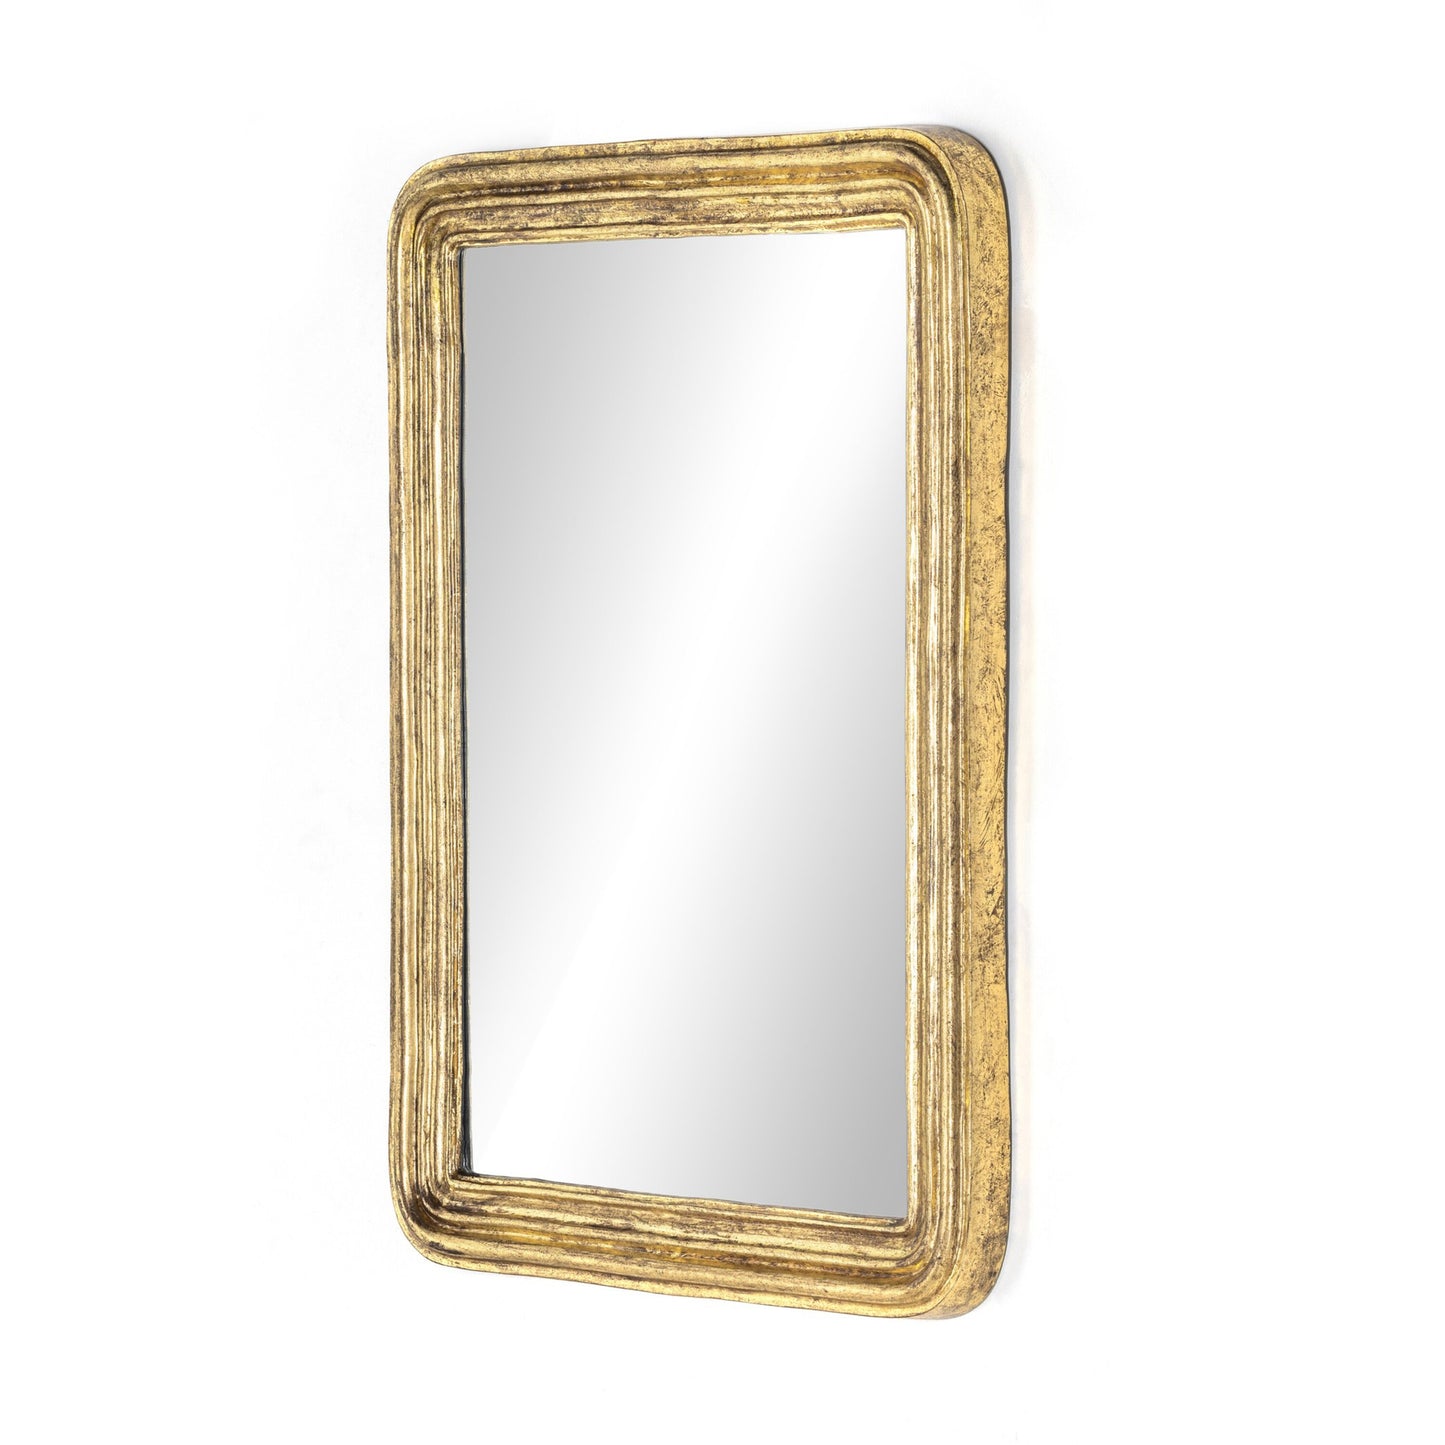 Vintage louis mirror: antiqued gold leaf